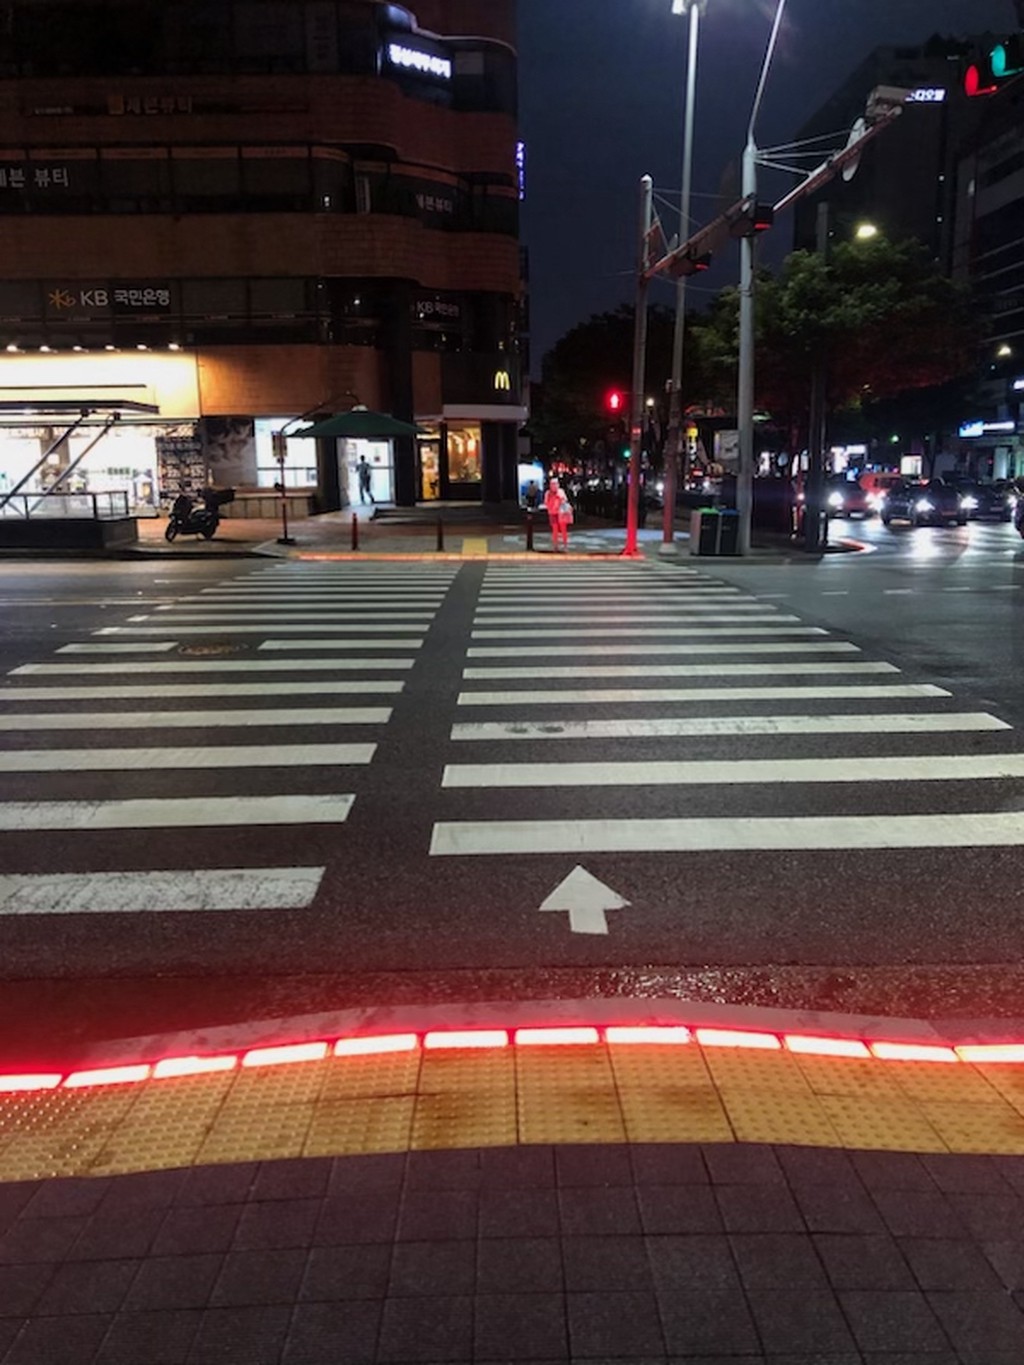 Traffic lights on the ground